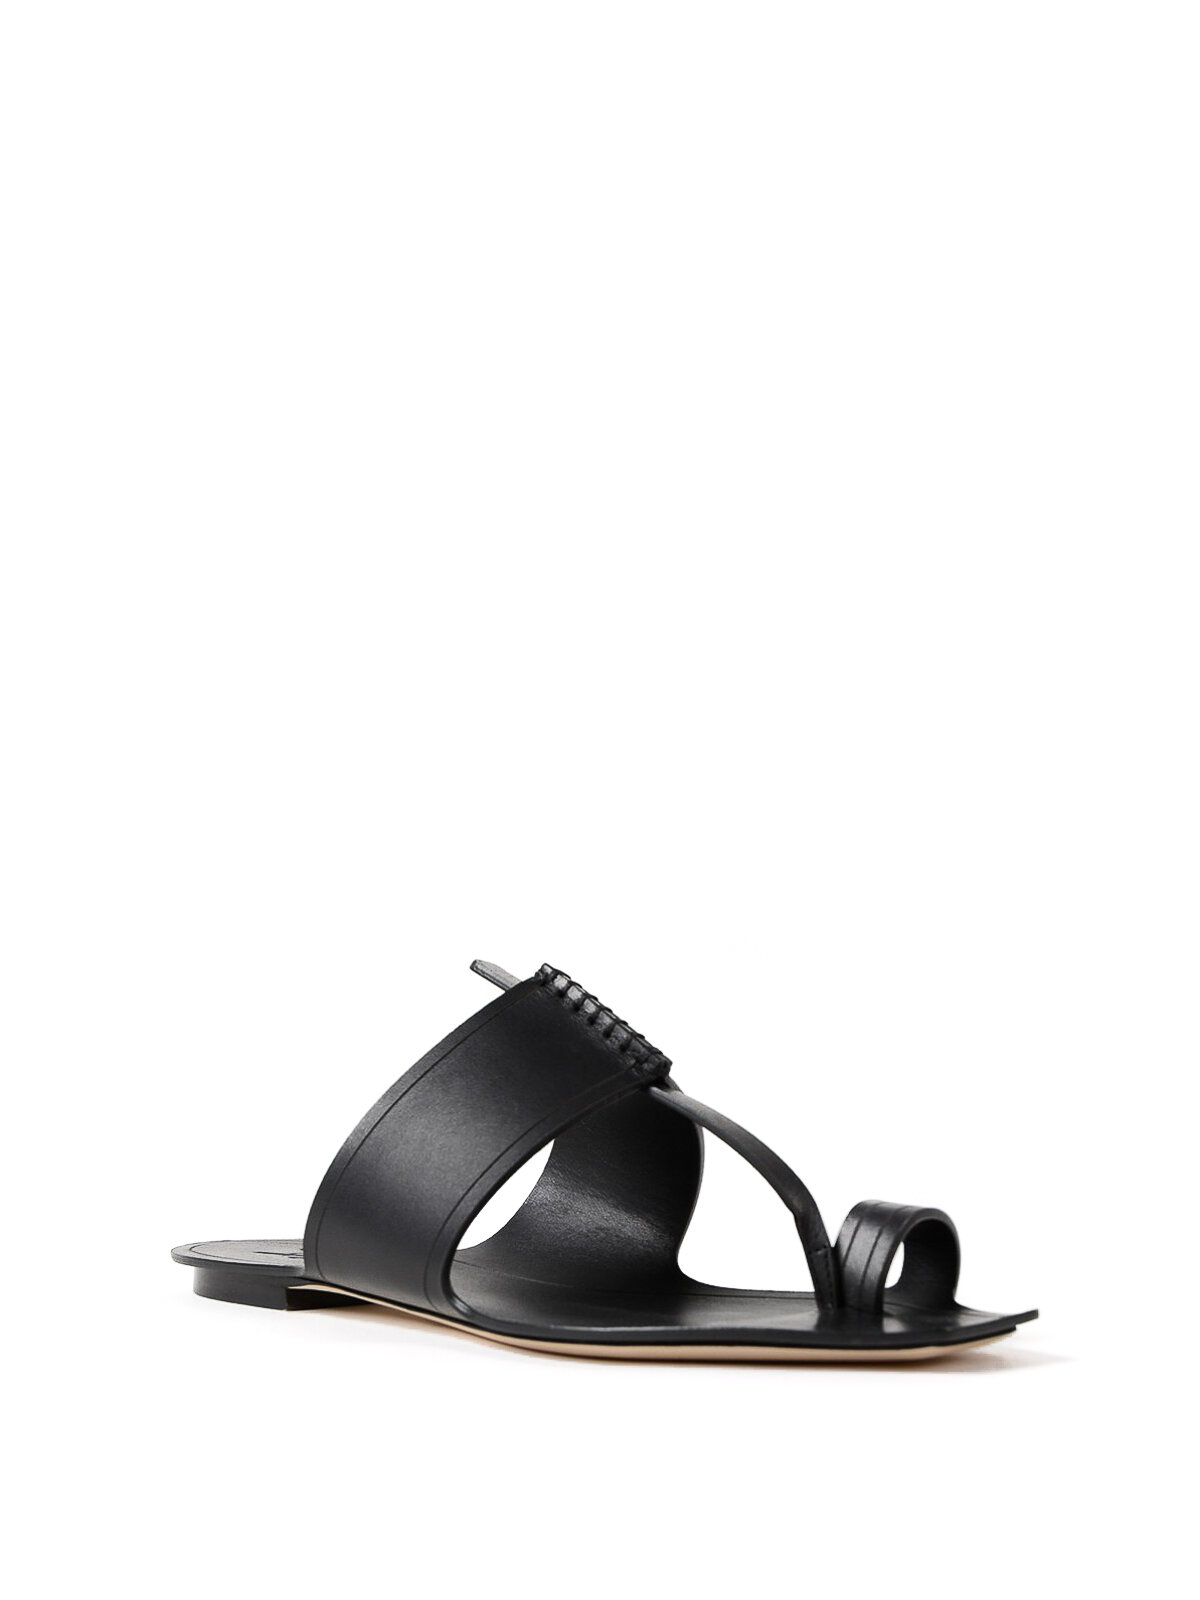 Saint Laurent Saba Sandals in Black Leather.jpg